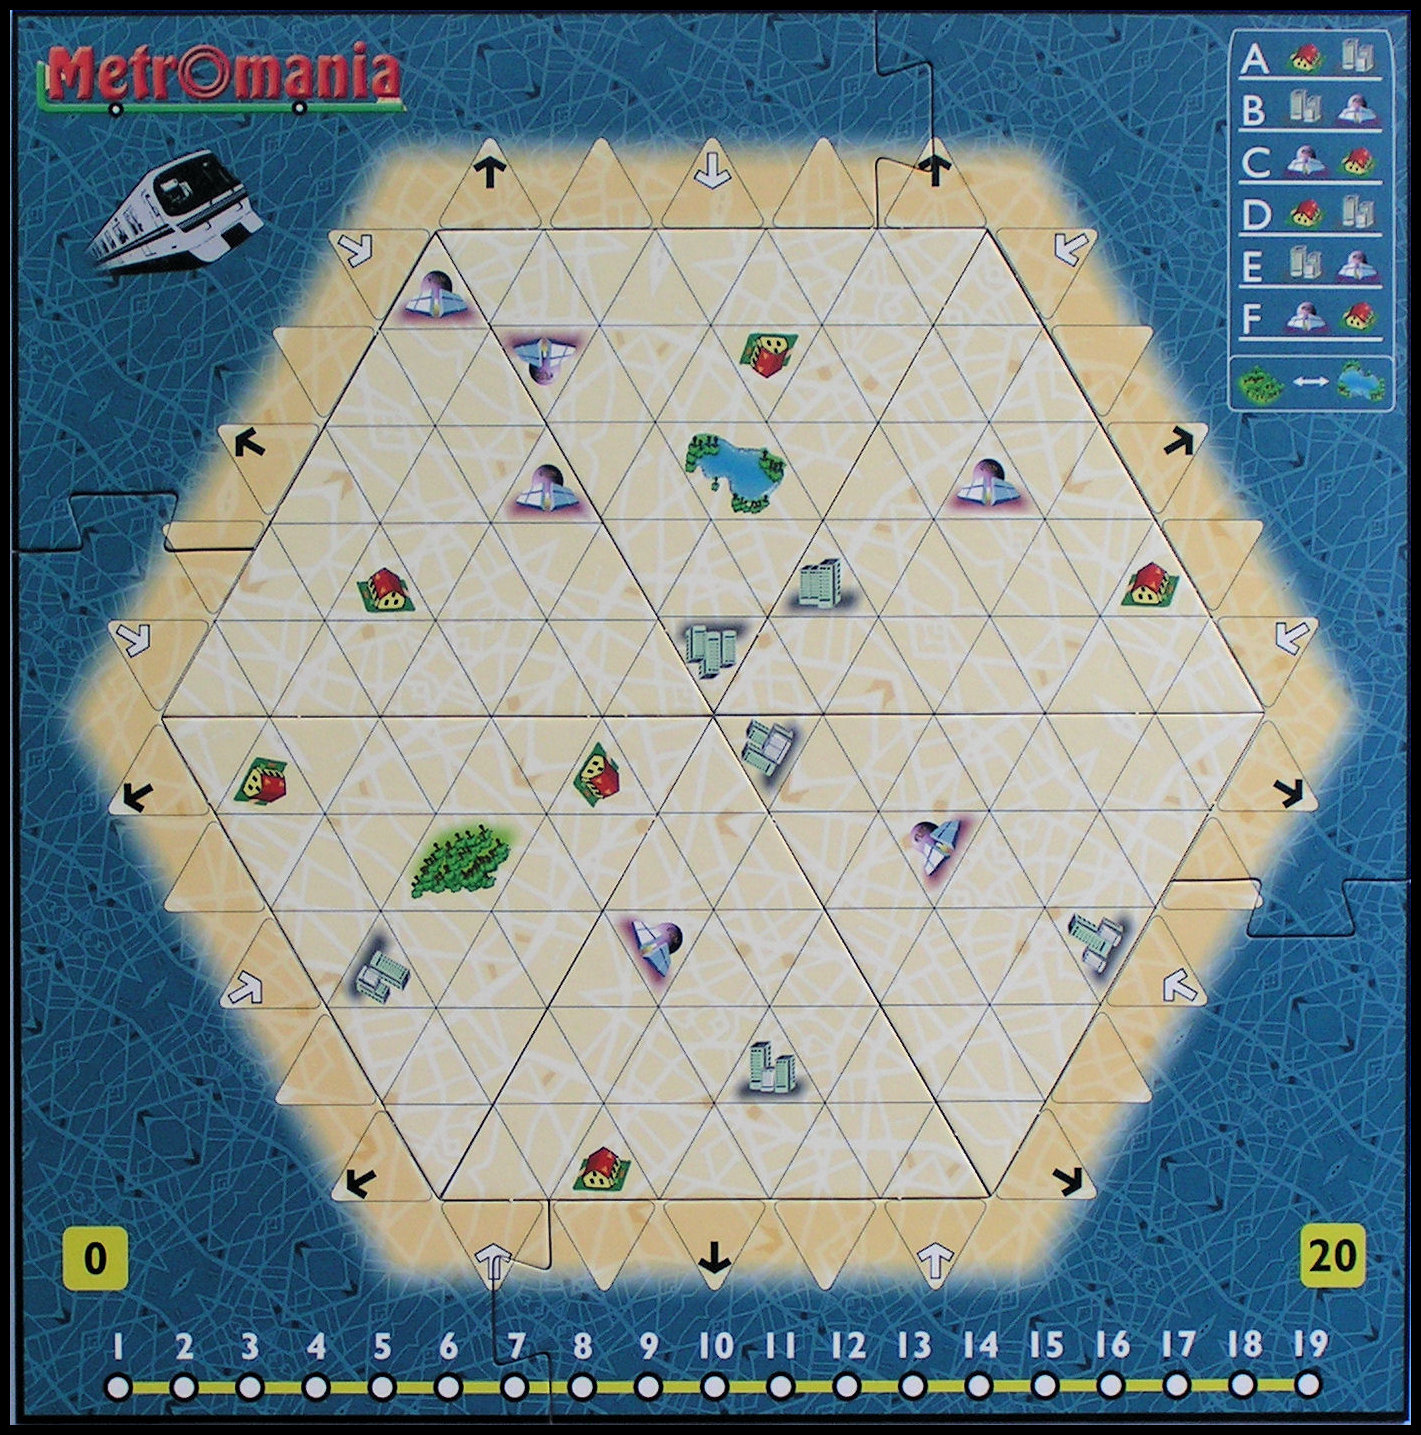 Metromania - Game Board (Pieced Together)